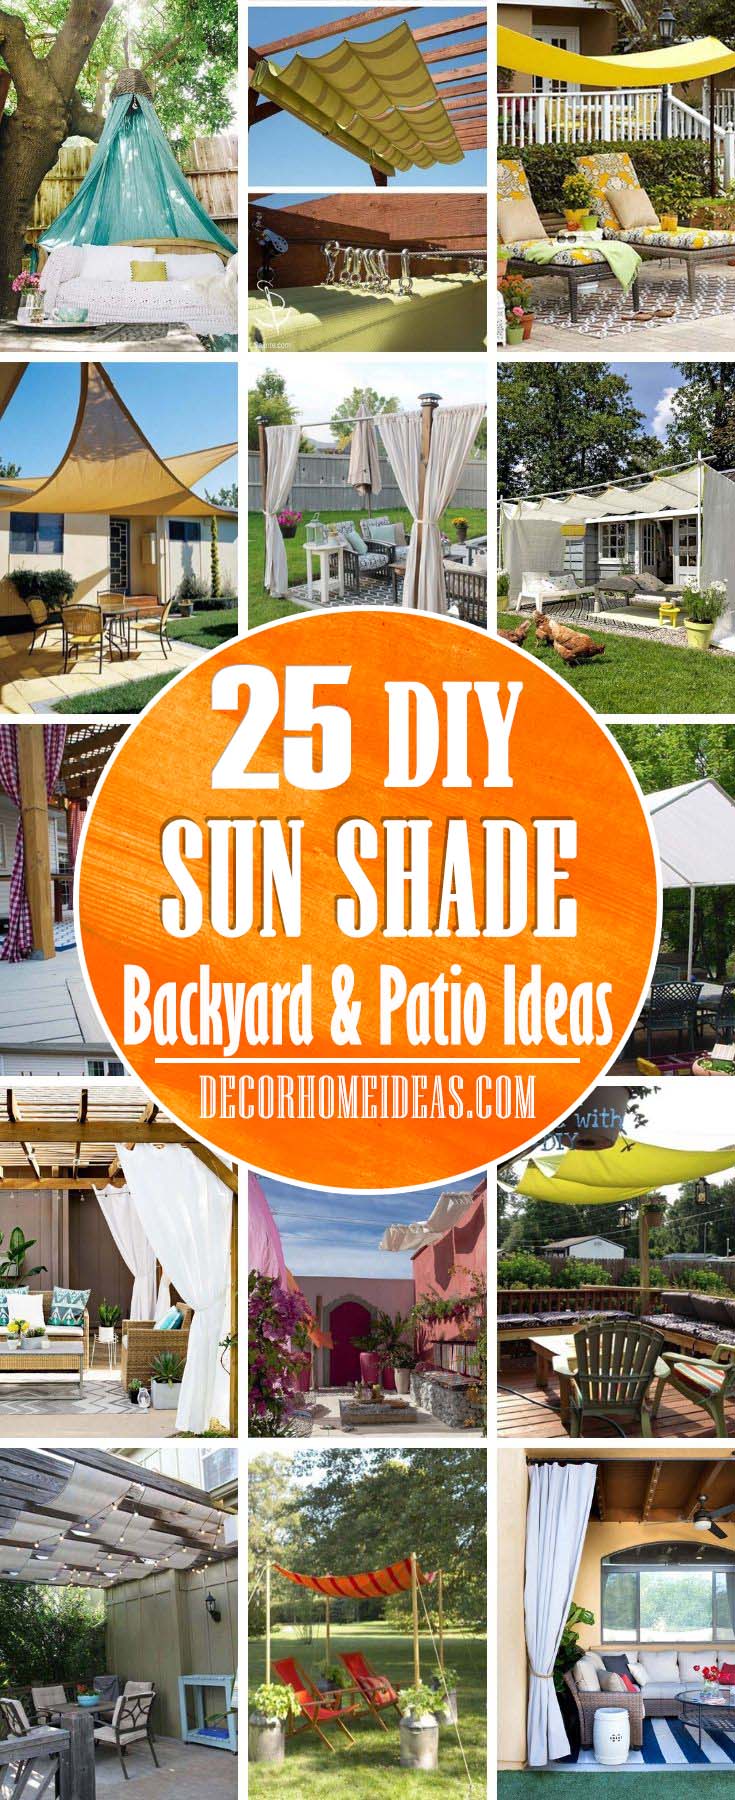 DIY Sun Shade Backyard Ideas. These DIY sun shade ideas can transform your backyard or patio into a relaxing oasis where you can enjoy the hot summer days! #diy #sunshade #backyard #patio #decorhomeideas